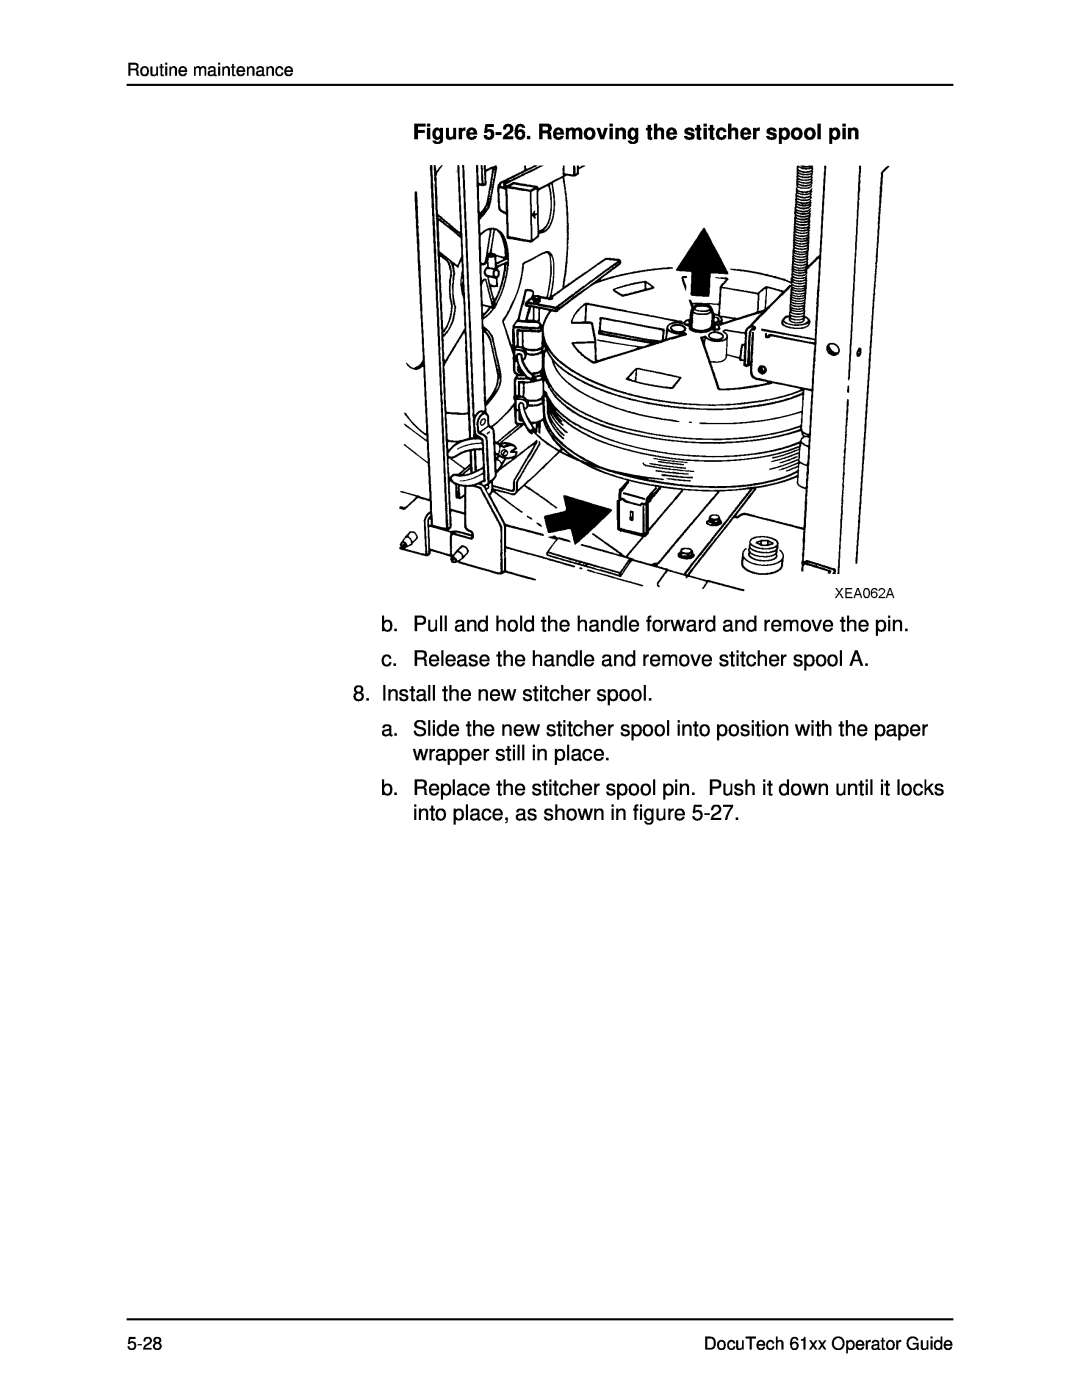 Xerox 61xx manual 26. Removing the stitcher spool pin 